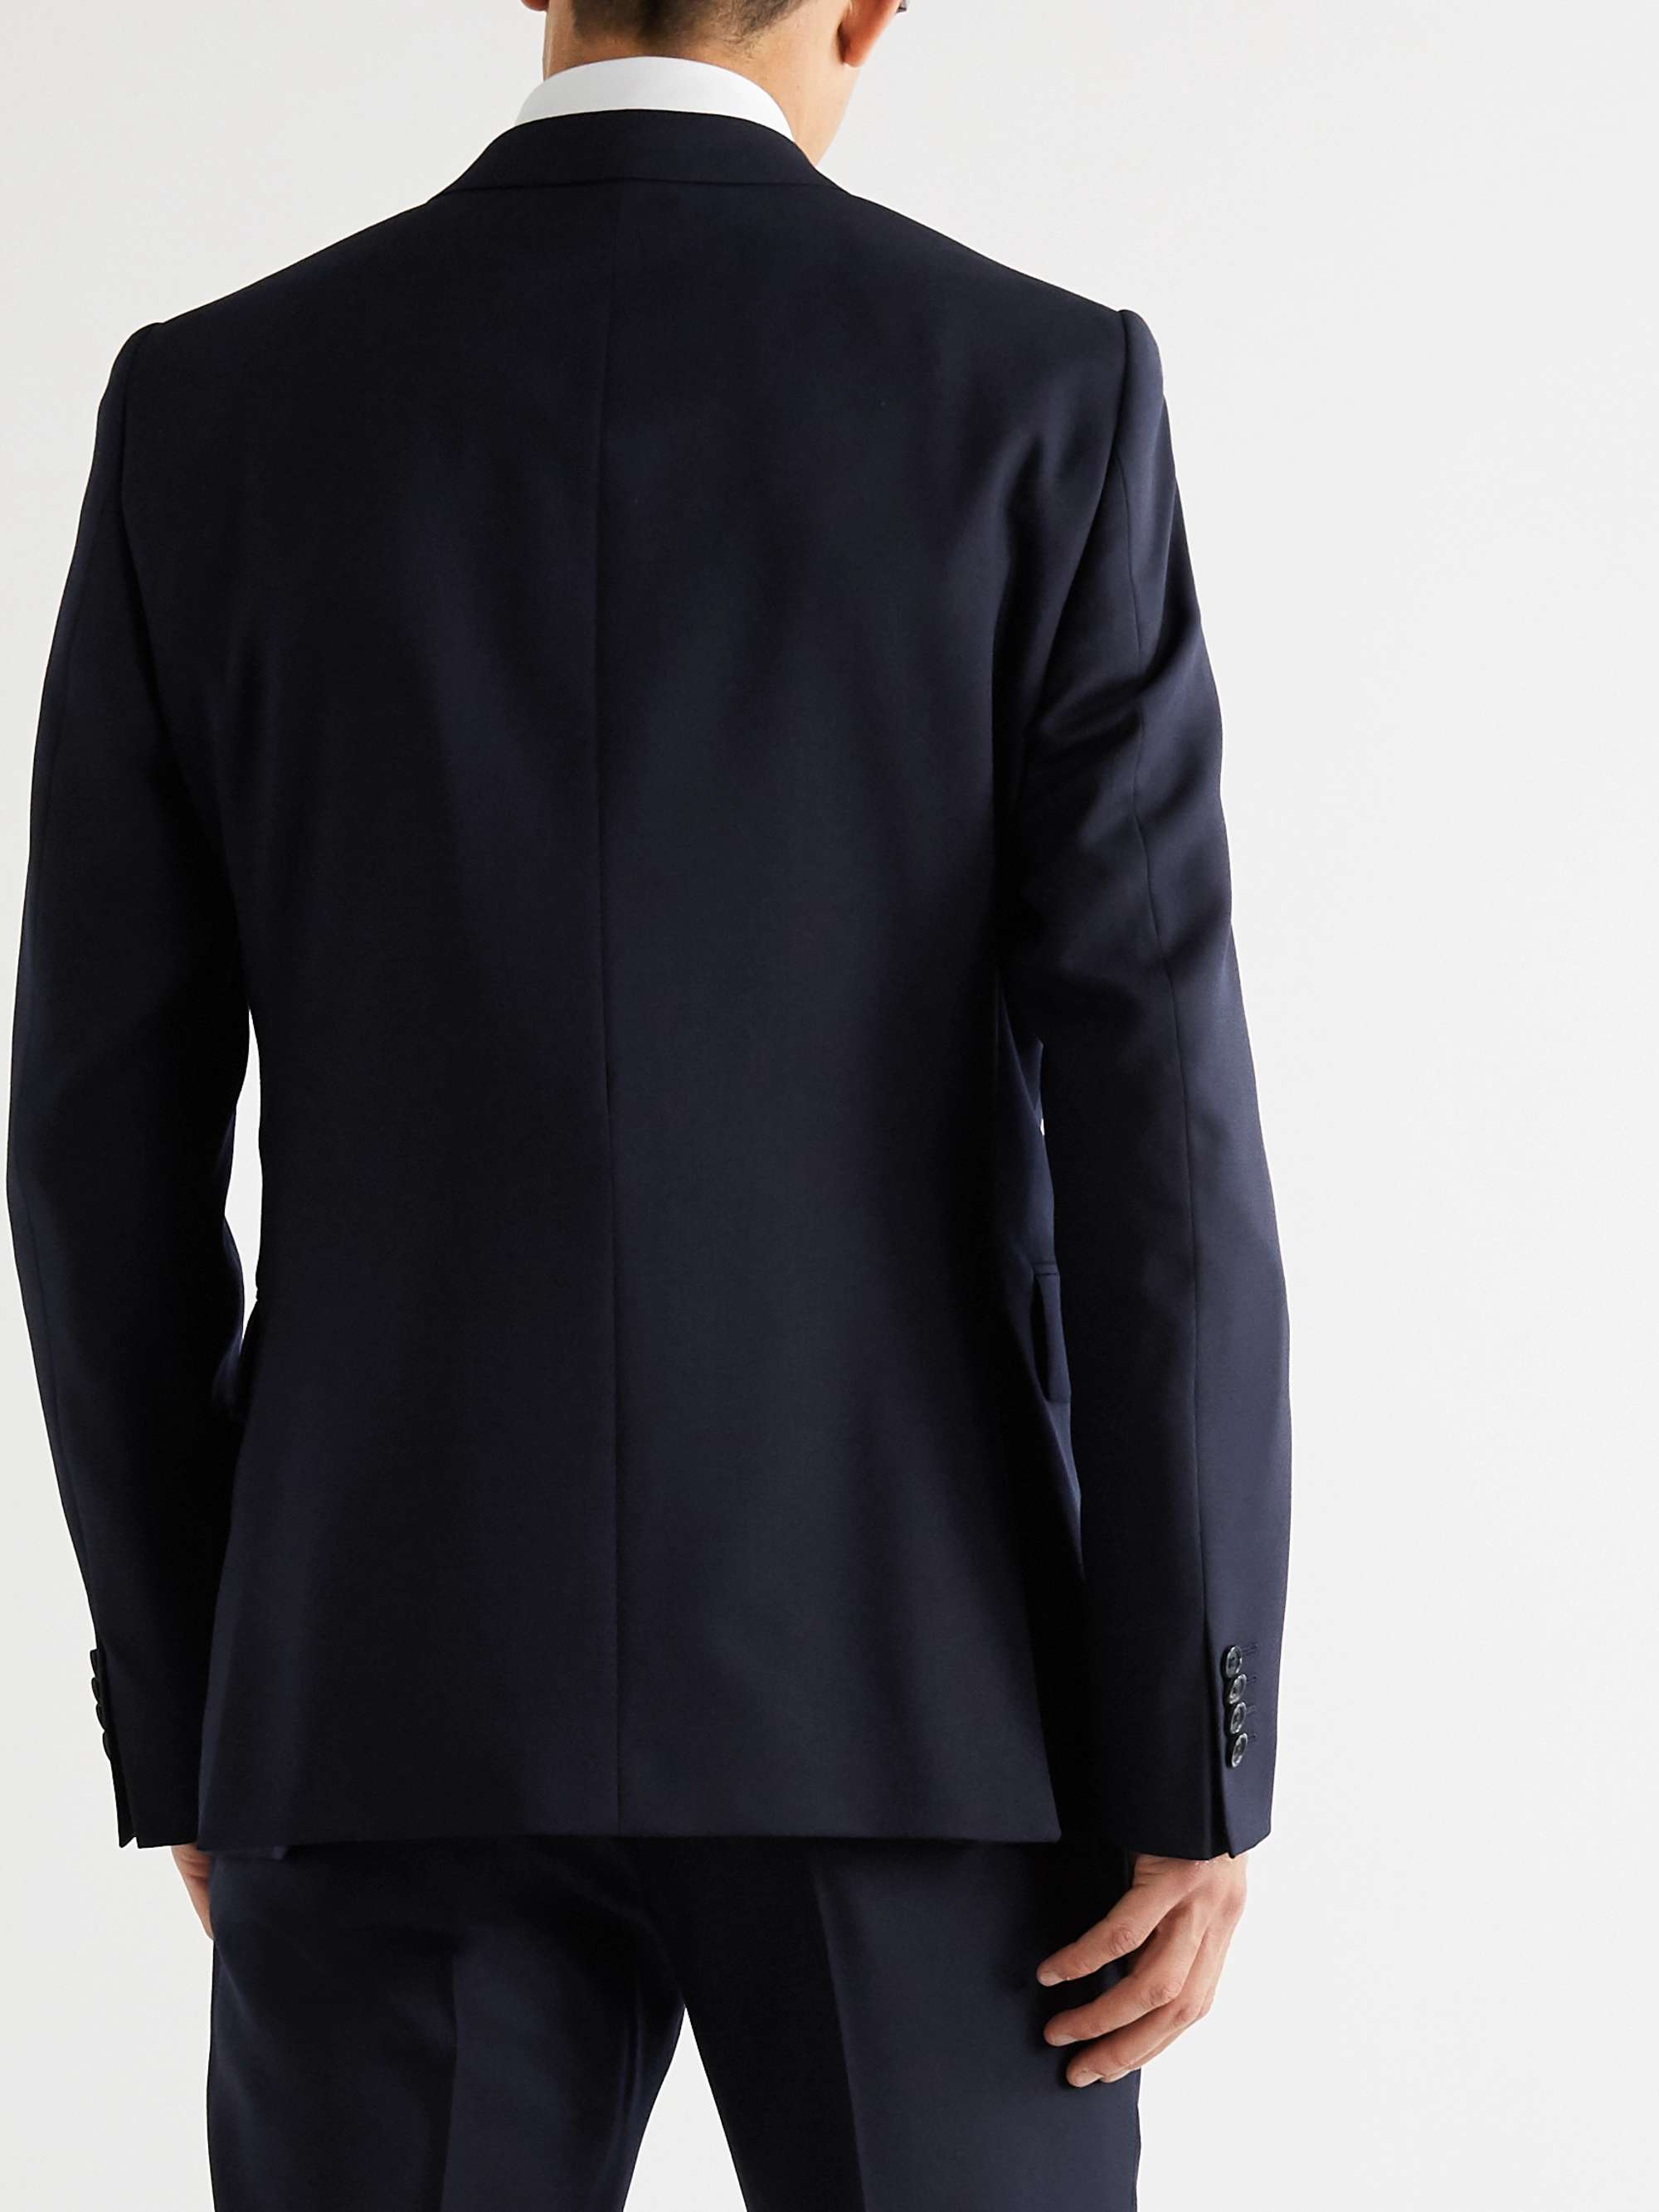 PAUL SMITH Soho Slim-Fit Wool-Twill Suit Jacket